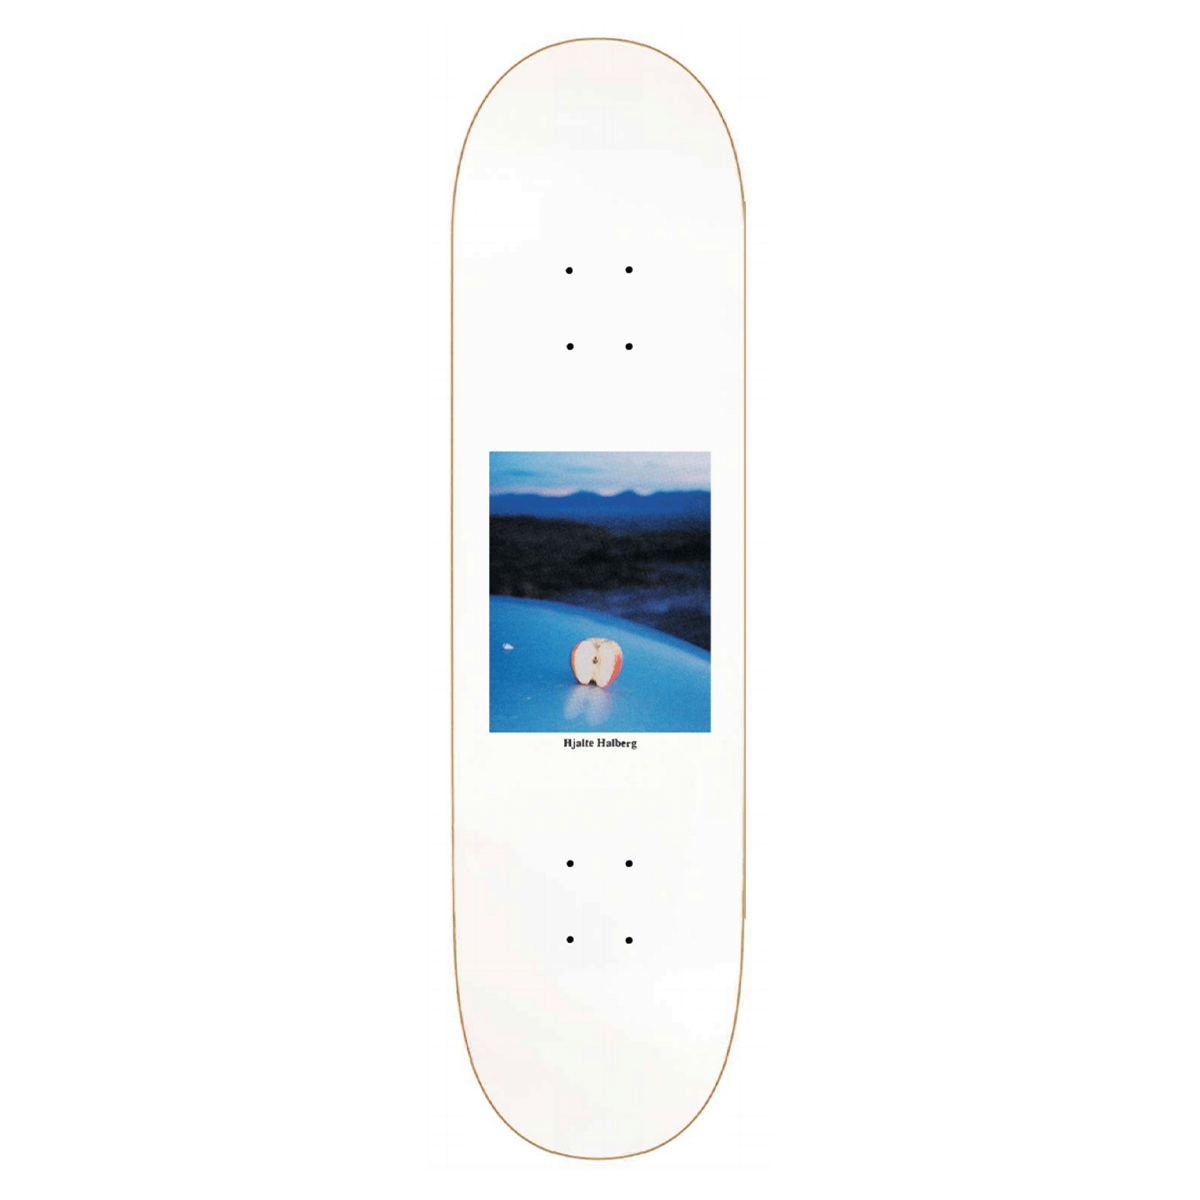 Polar Hjalte Halberg Apple Skate Deck - 8.0